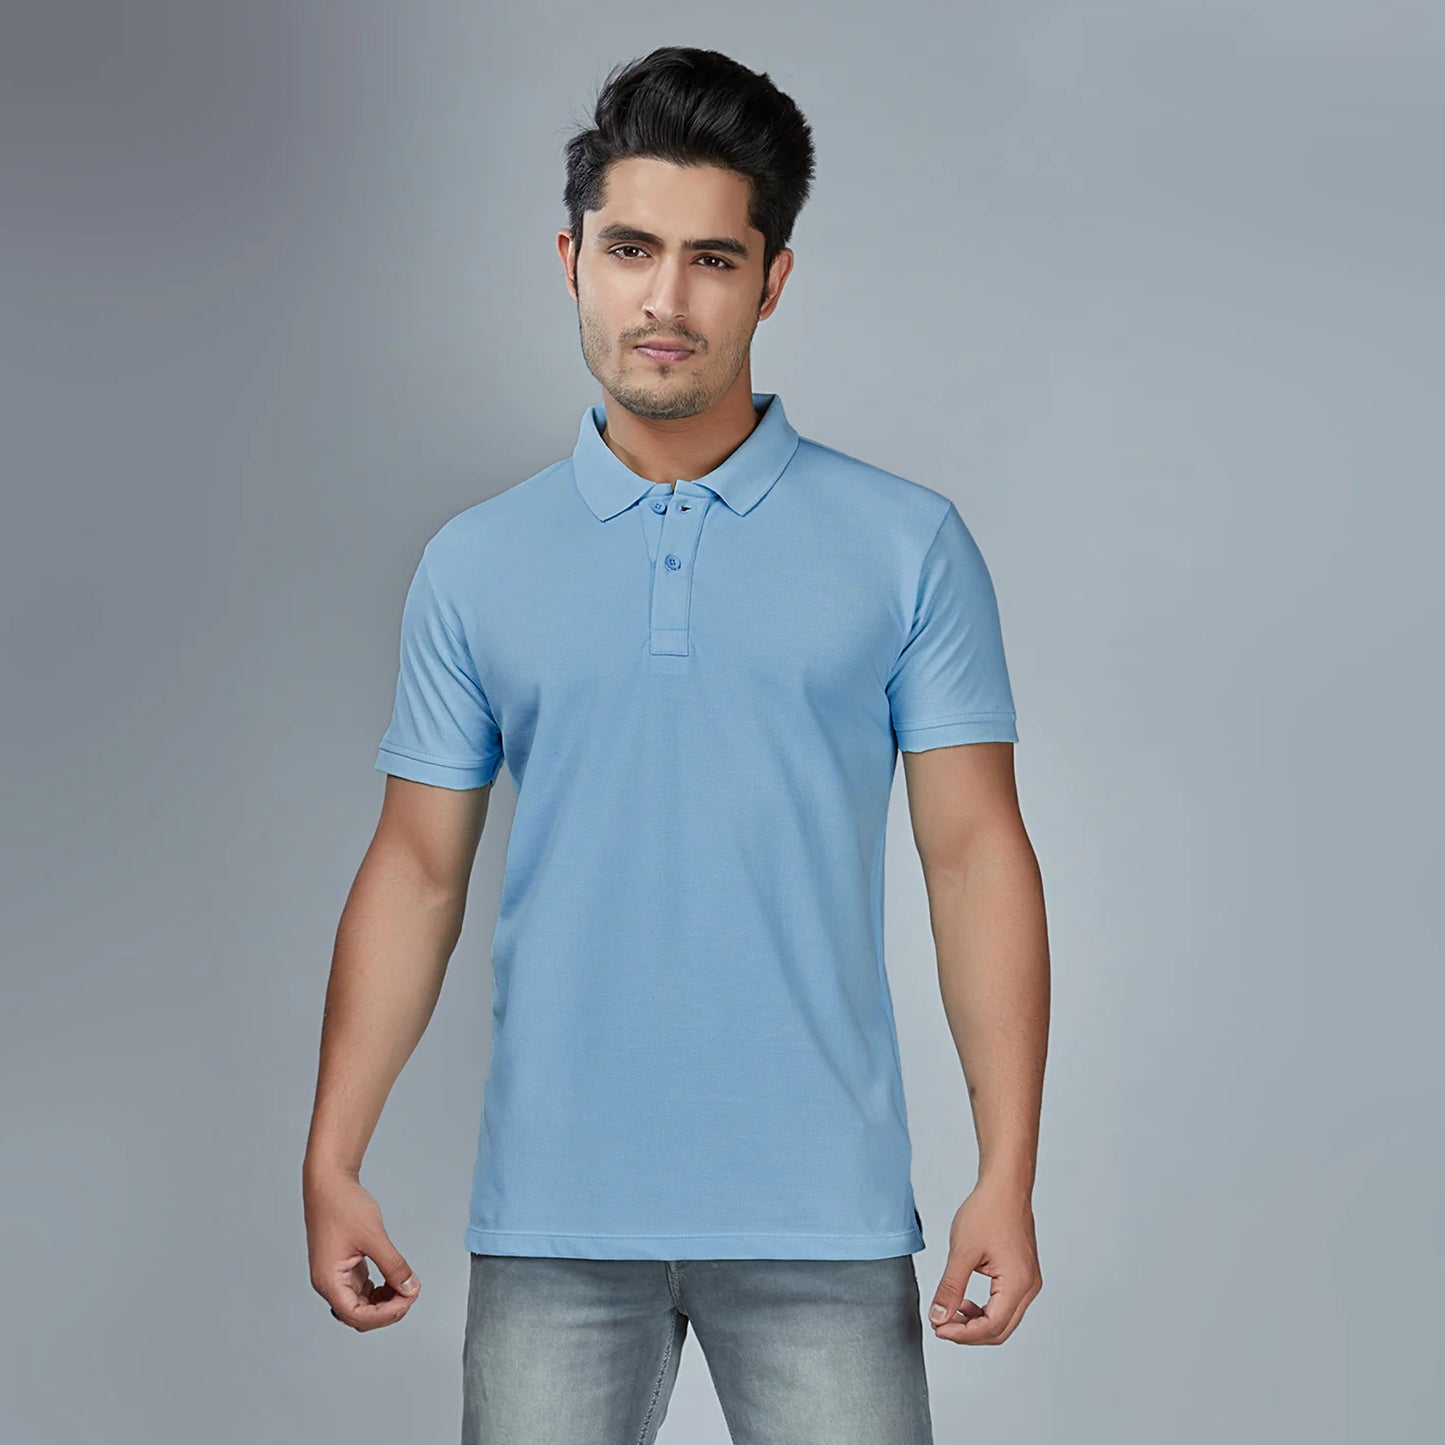 Men's Sky Blue Polo T-Shirt